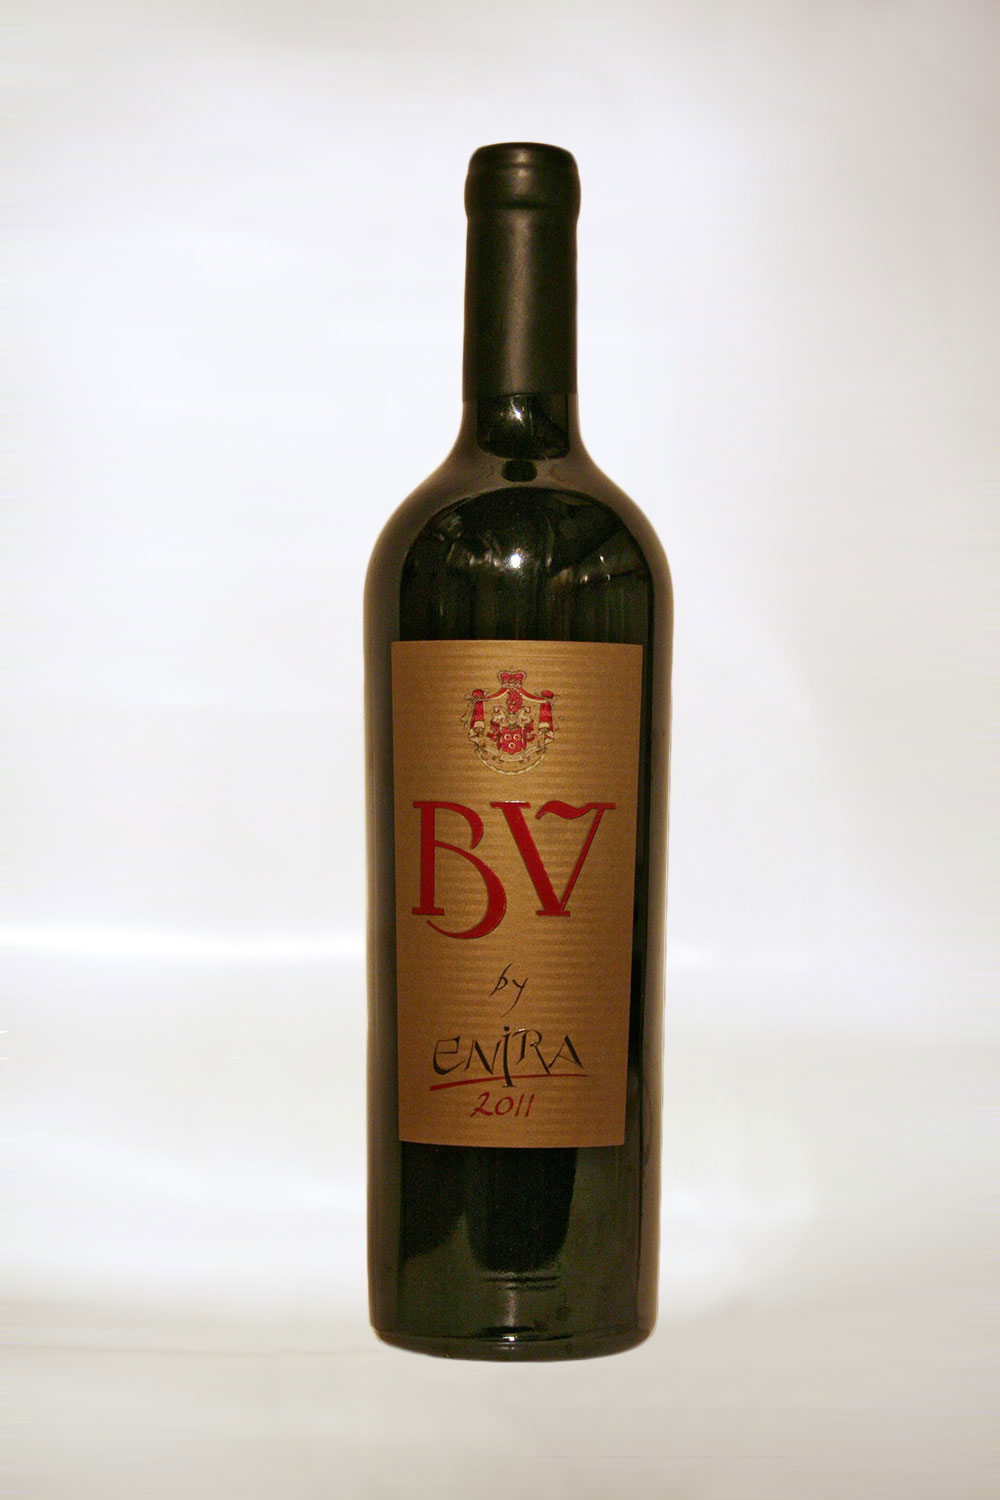 BV by Enira 2011